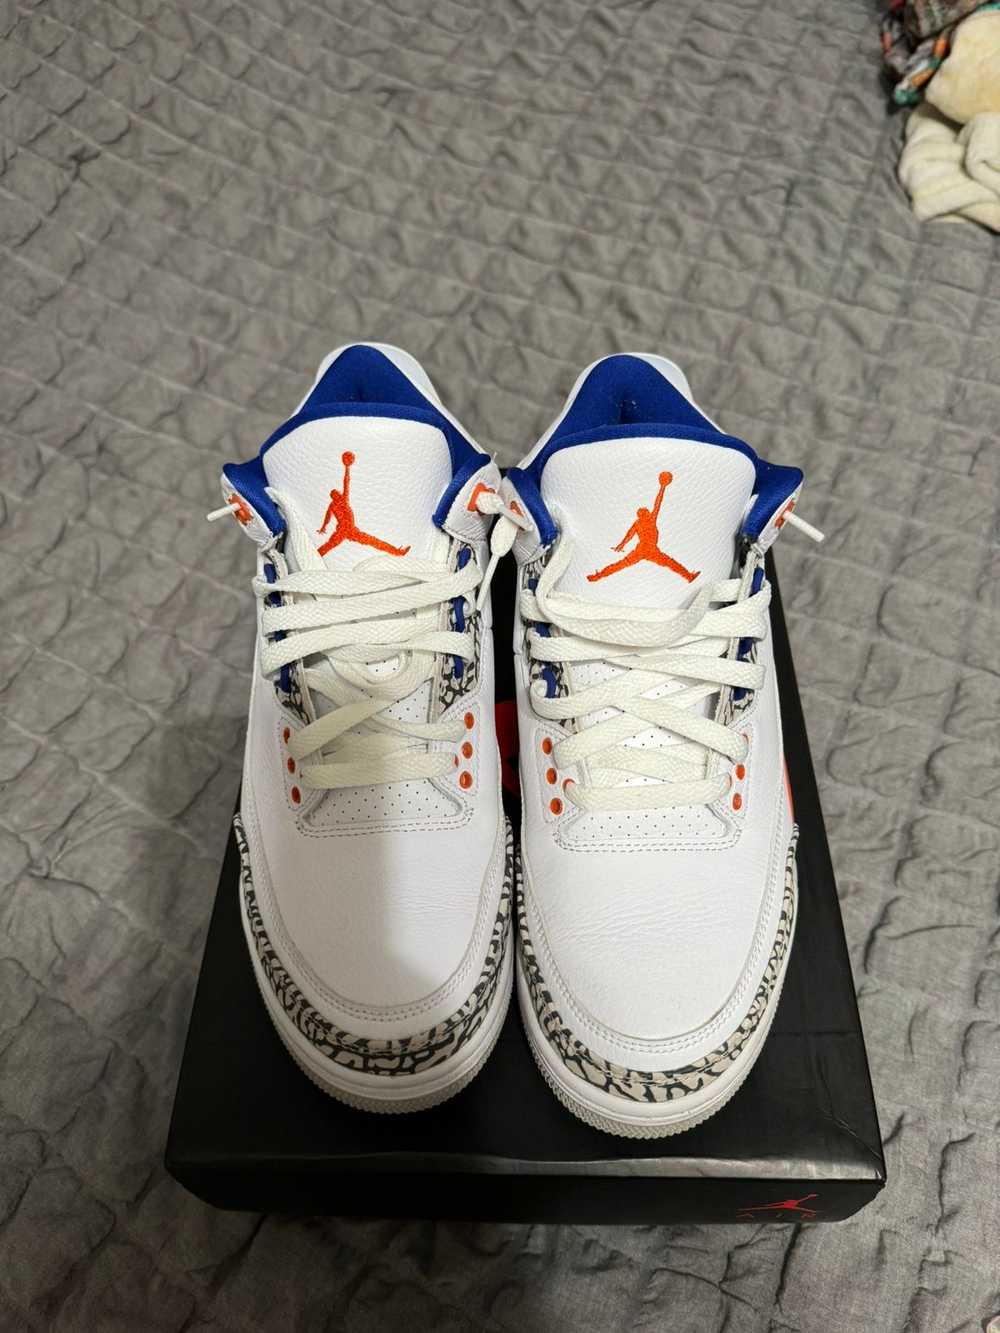 Jordan Brand Jordan 3 Retro Knicks - image 2